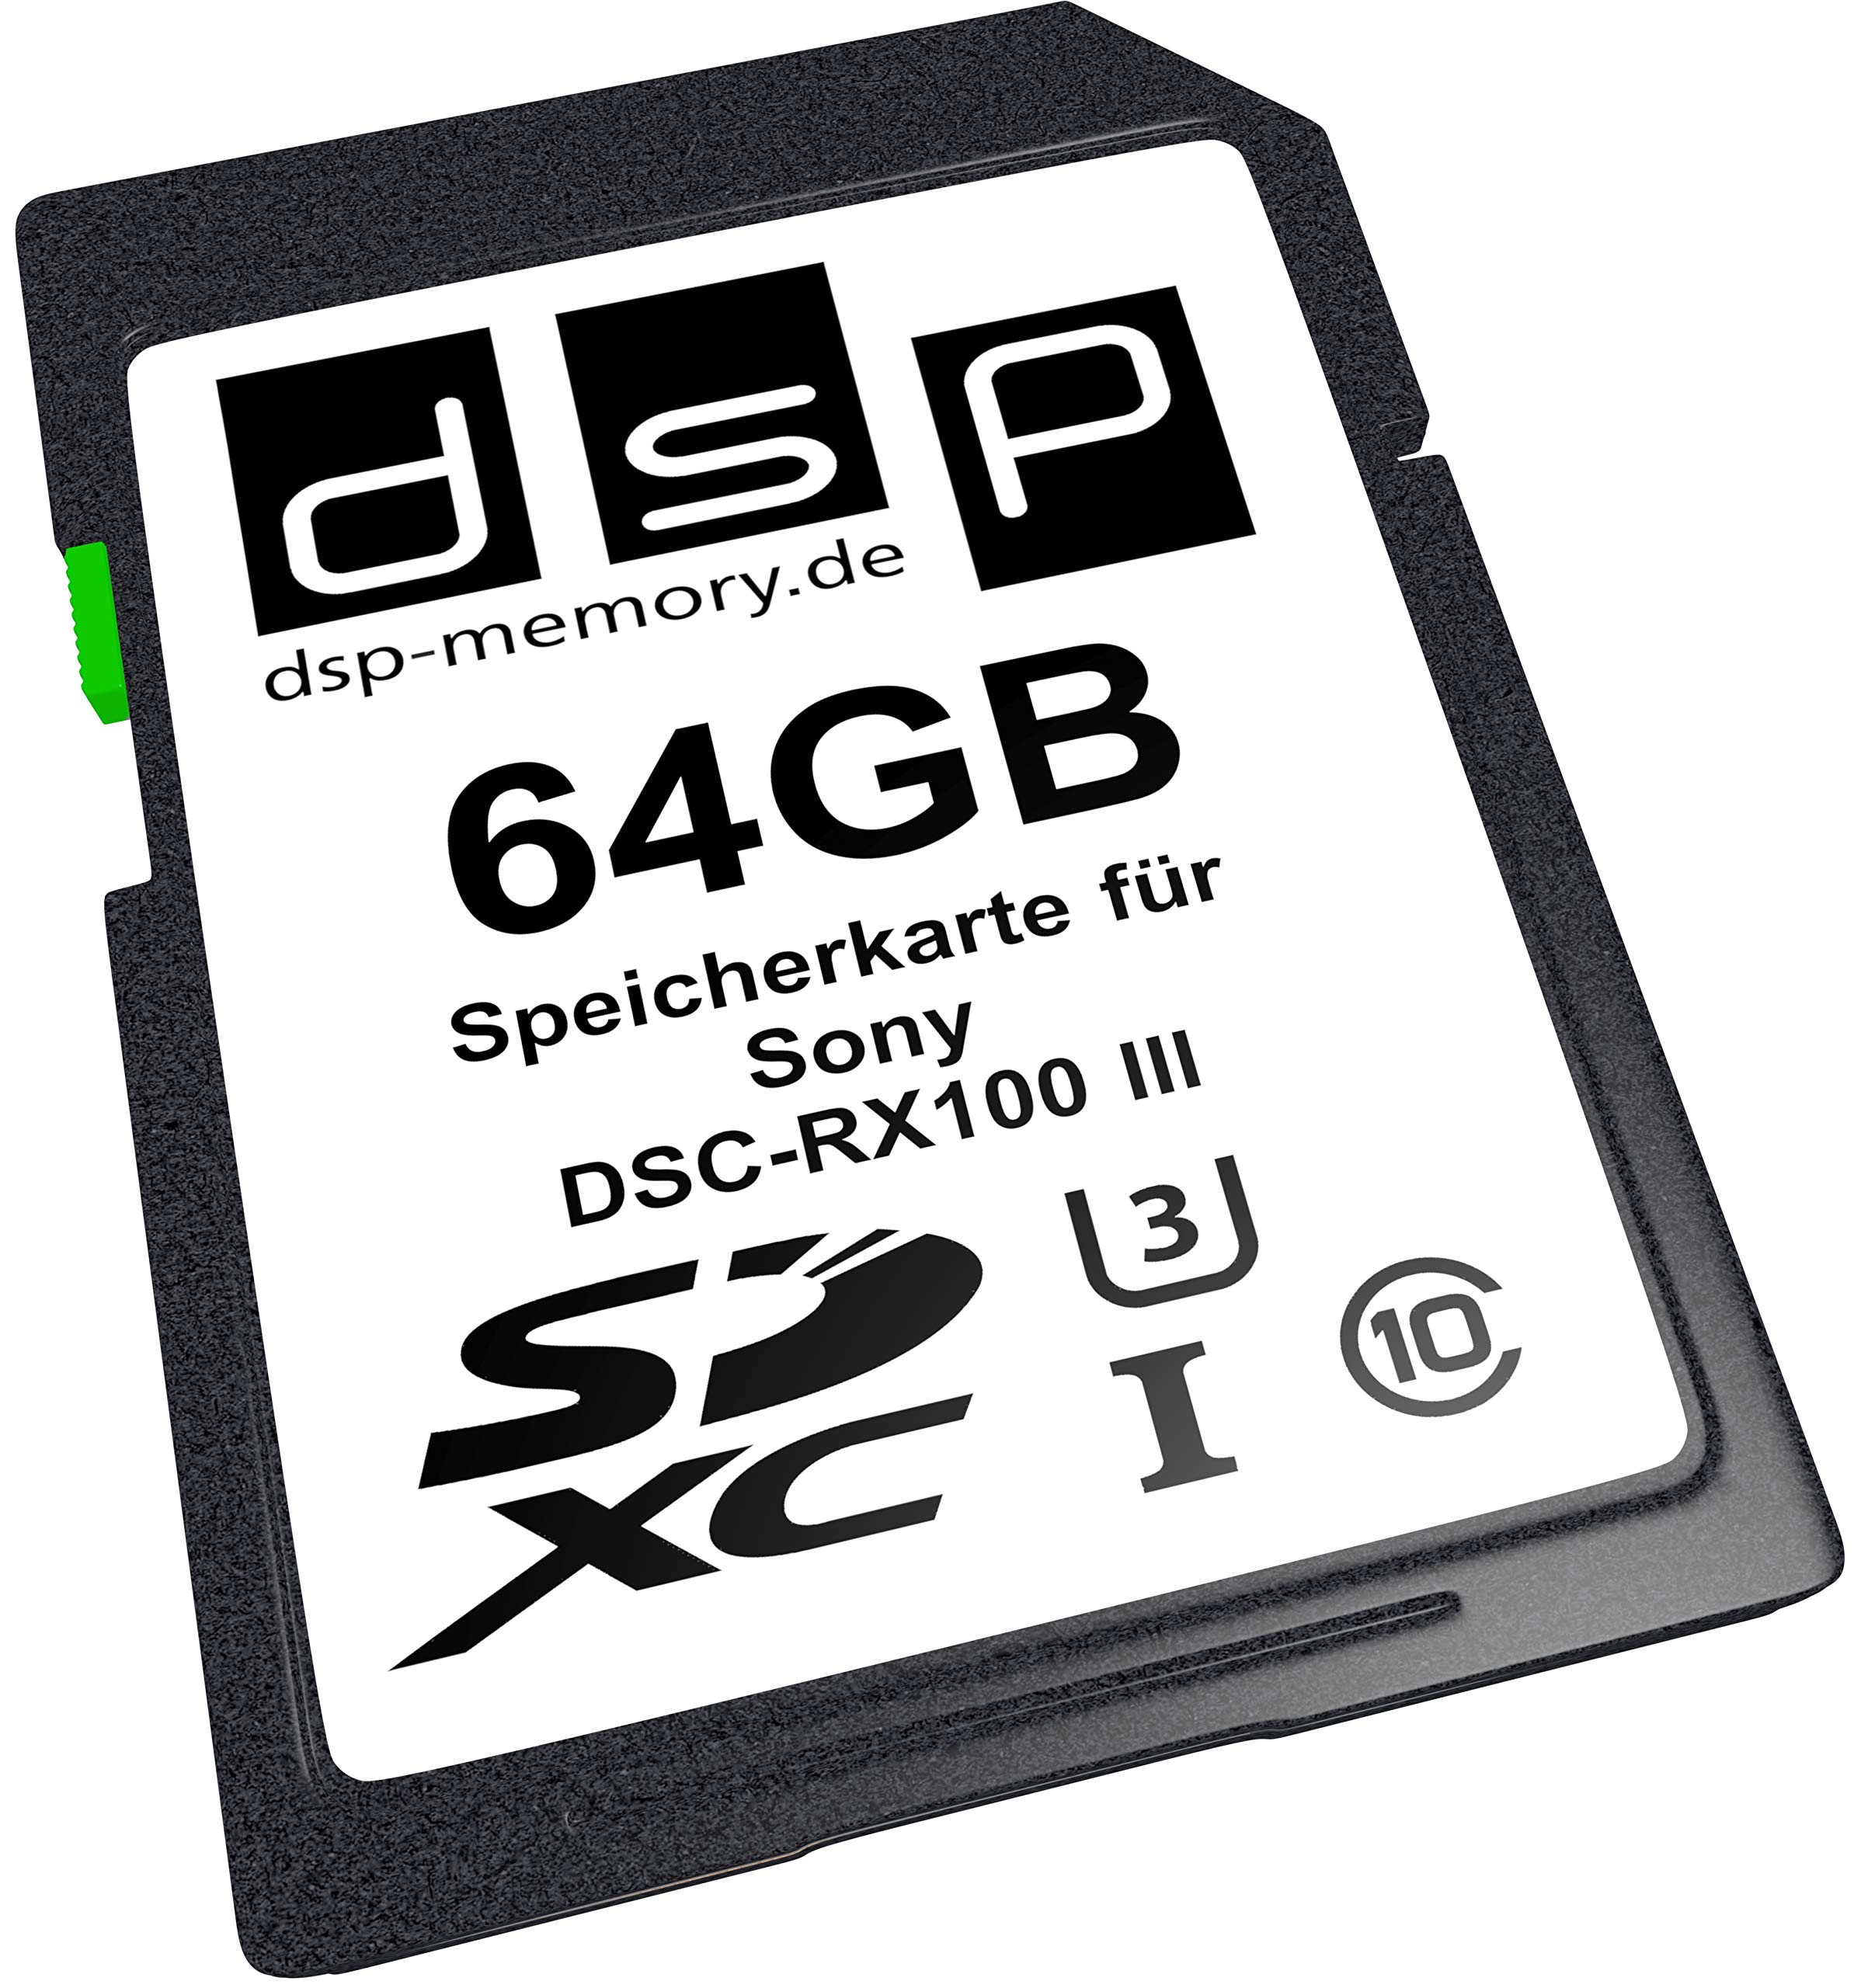 64GB Ultra Highspeed Speicherkarte für Sony DSC-RX100 III Digitalkamera